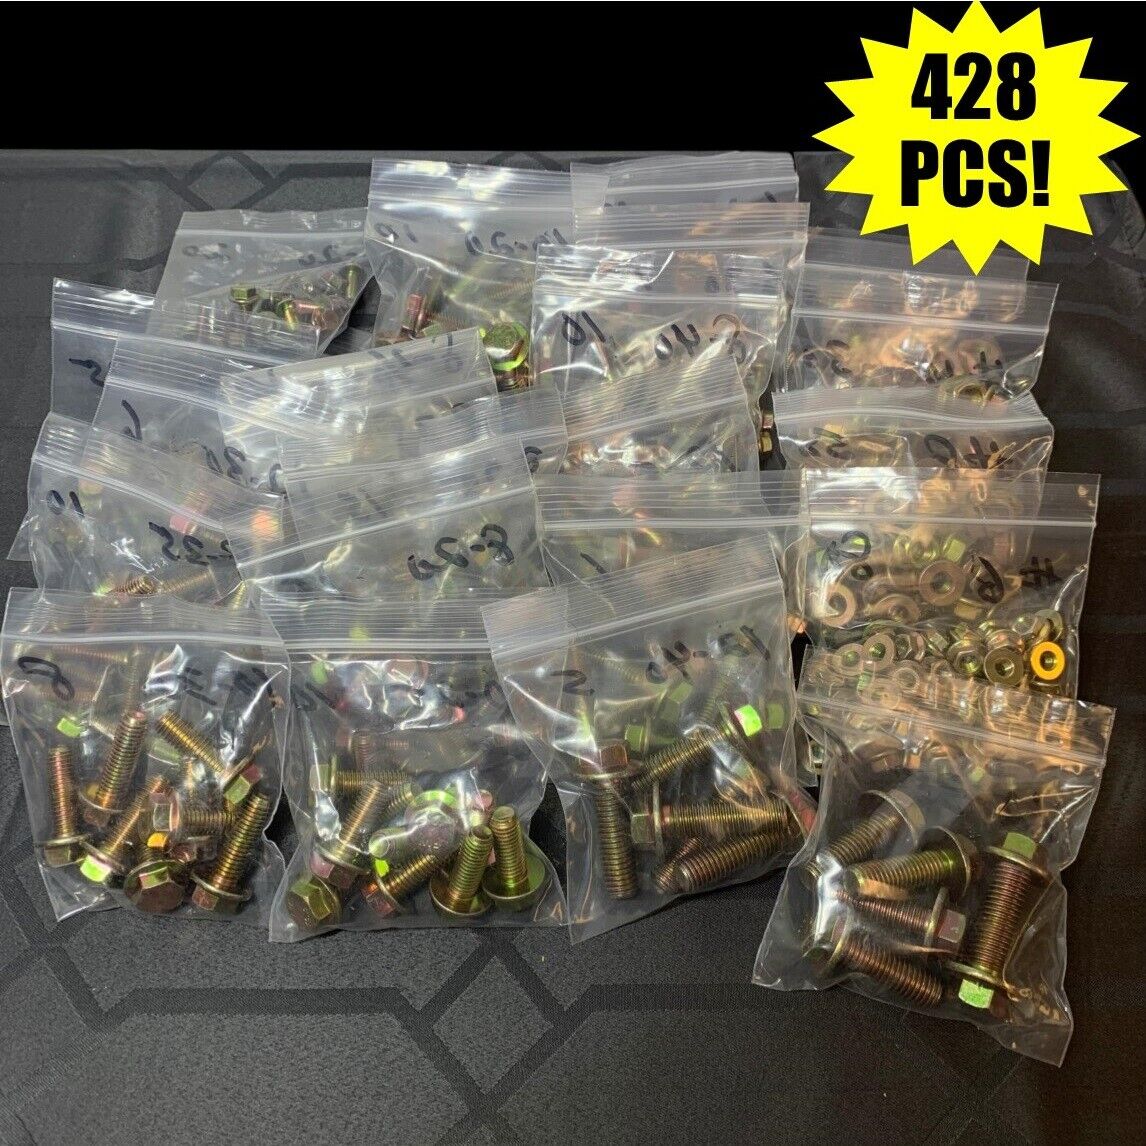 Grade 10.9 Metric Flange Bolt & Flange Nut Yellow Assortment Kit - 428 Pieces